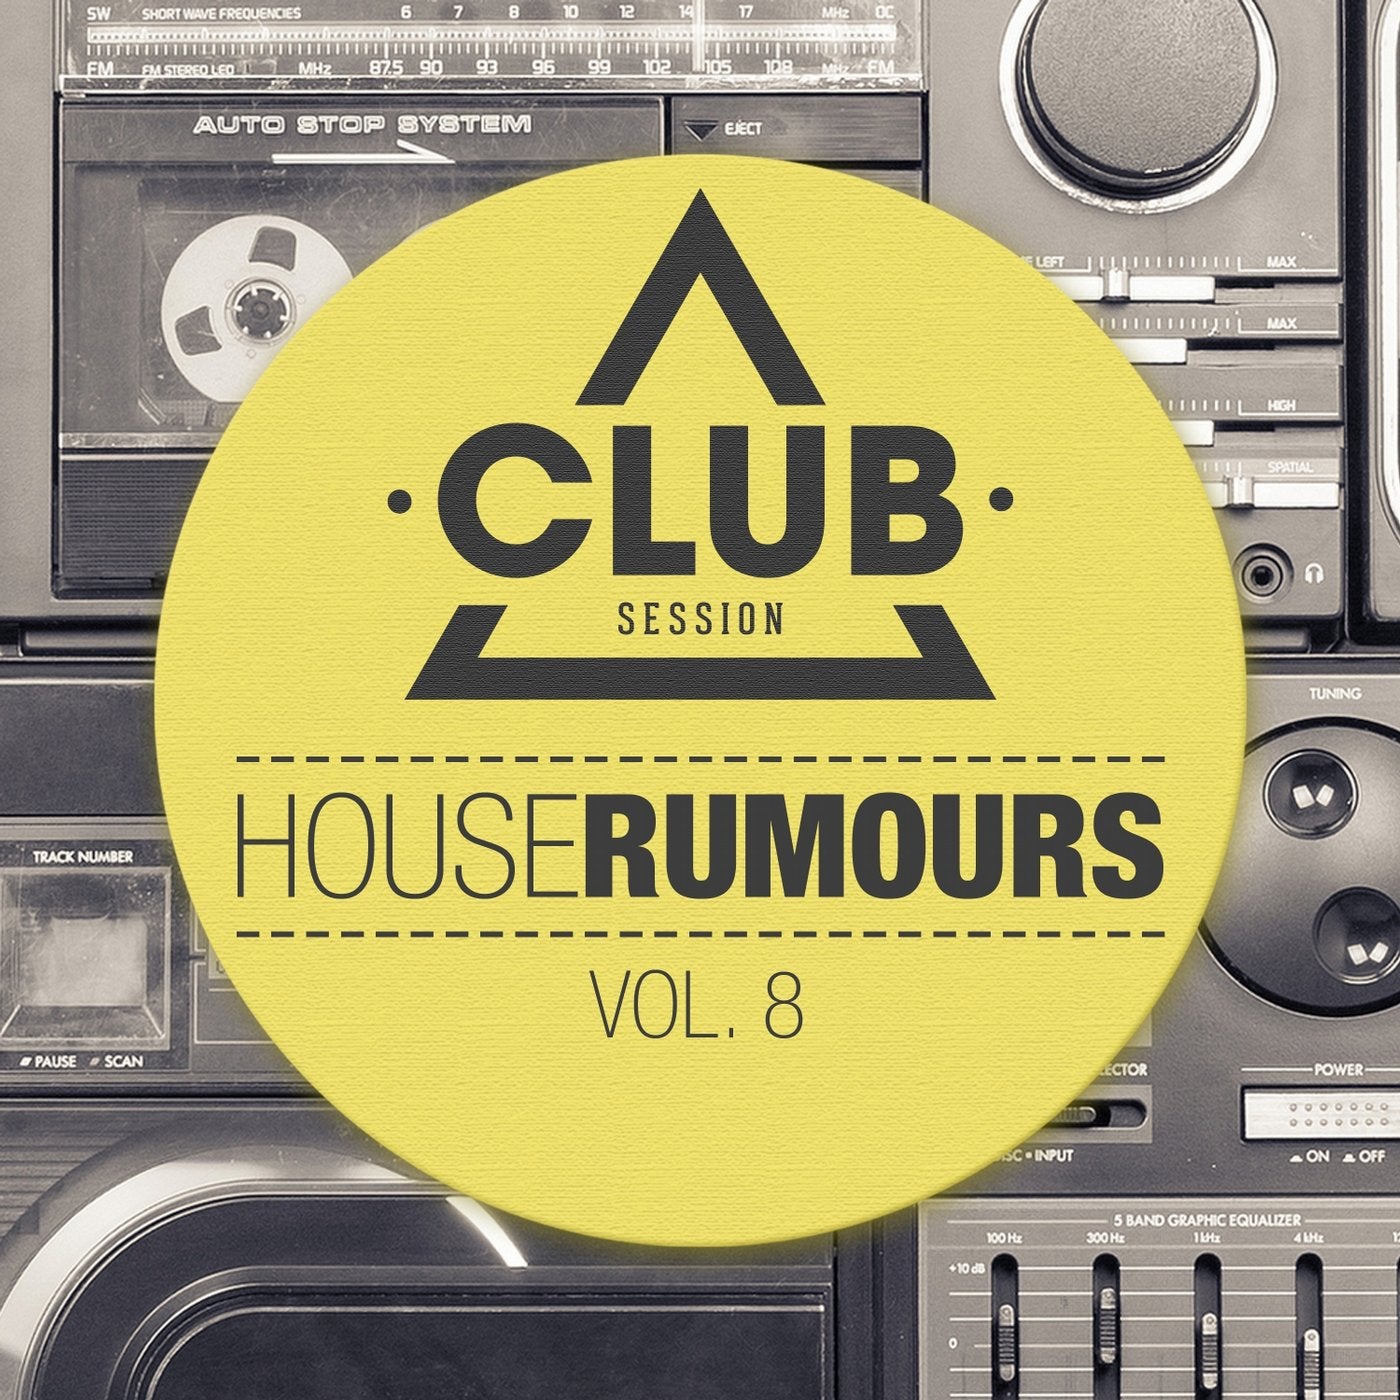 House Rumours Vol. 8